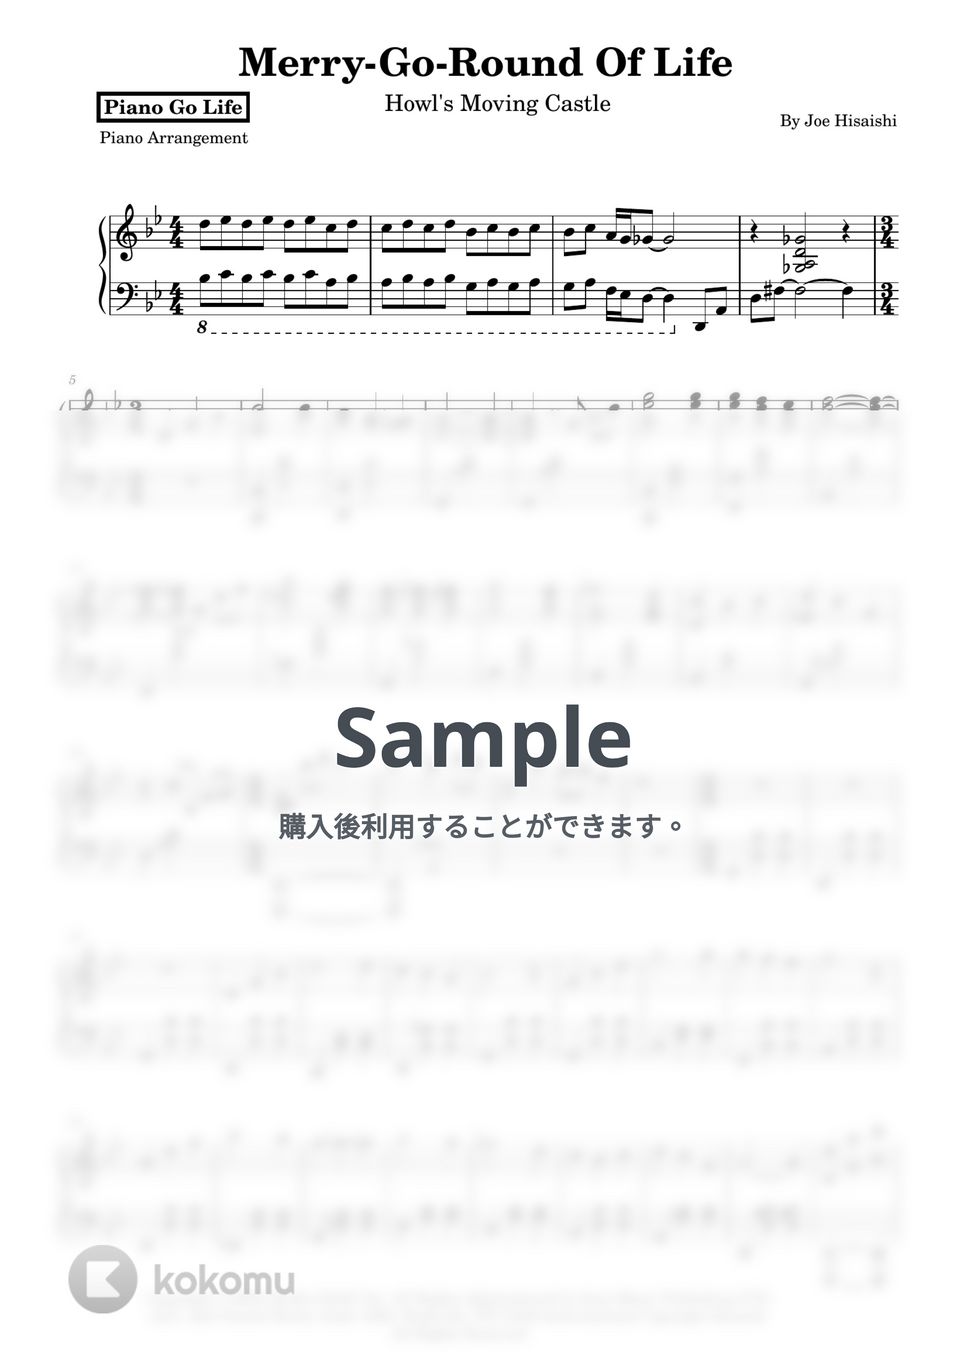 Joe Hisaishi - Merry Go Round Of Life (Howl's Moving Castle) by Piano Go Life